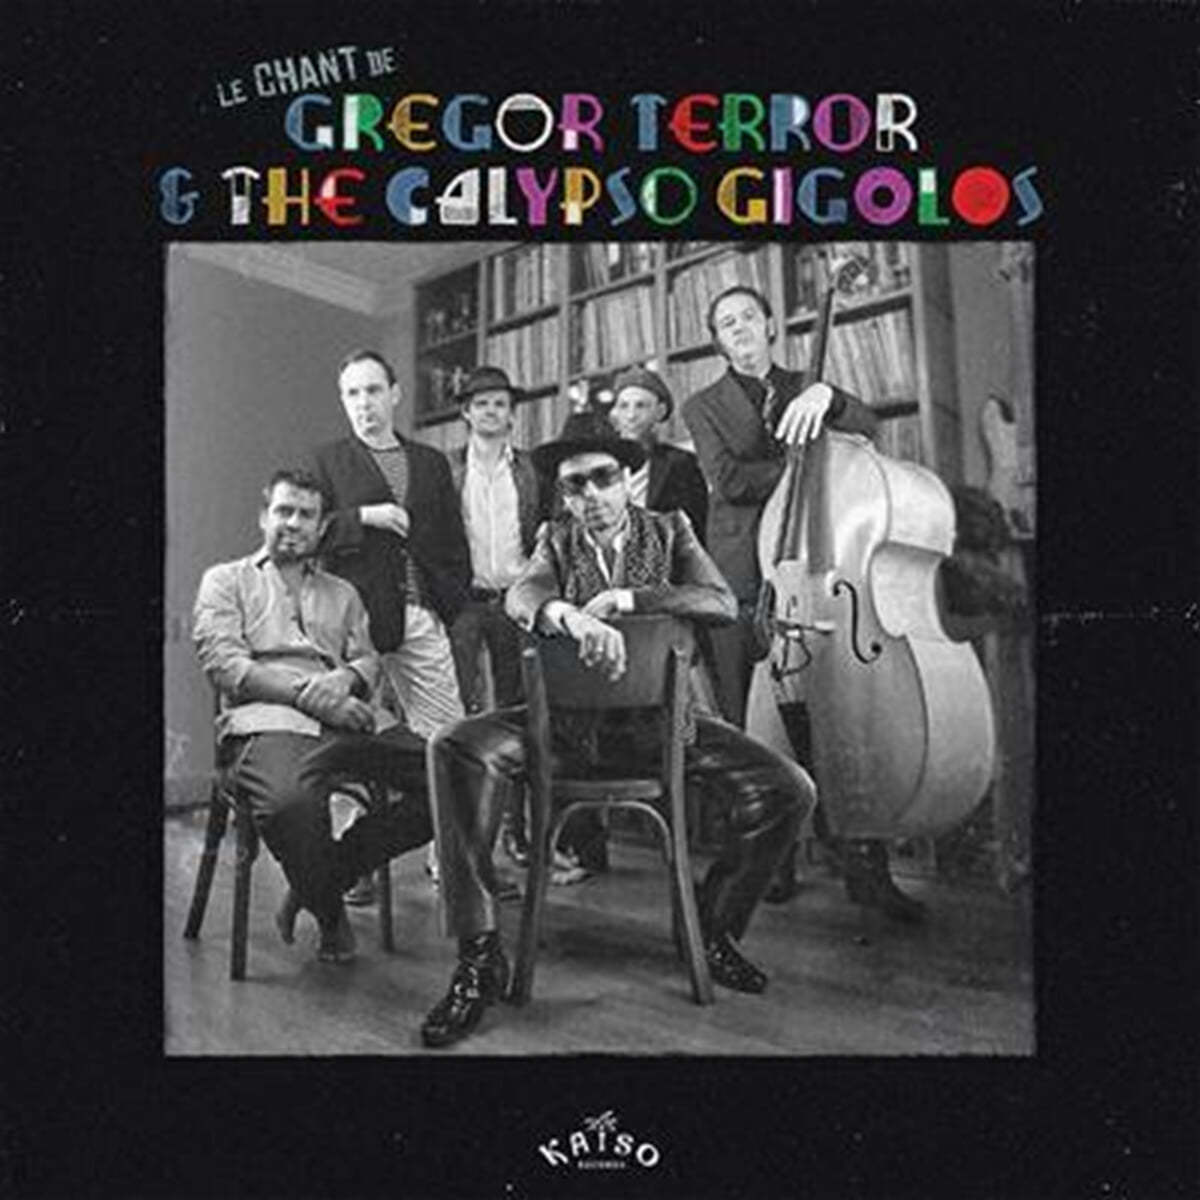 Gregor Terror And The Calypso Gigolos (그레고르 테러 앤 더 칼립소 기고로스) - Le Chant De Gregor Terror & The Calypso Gigolos [LP] 